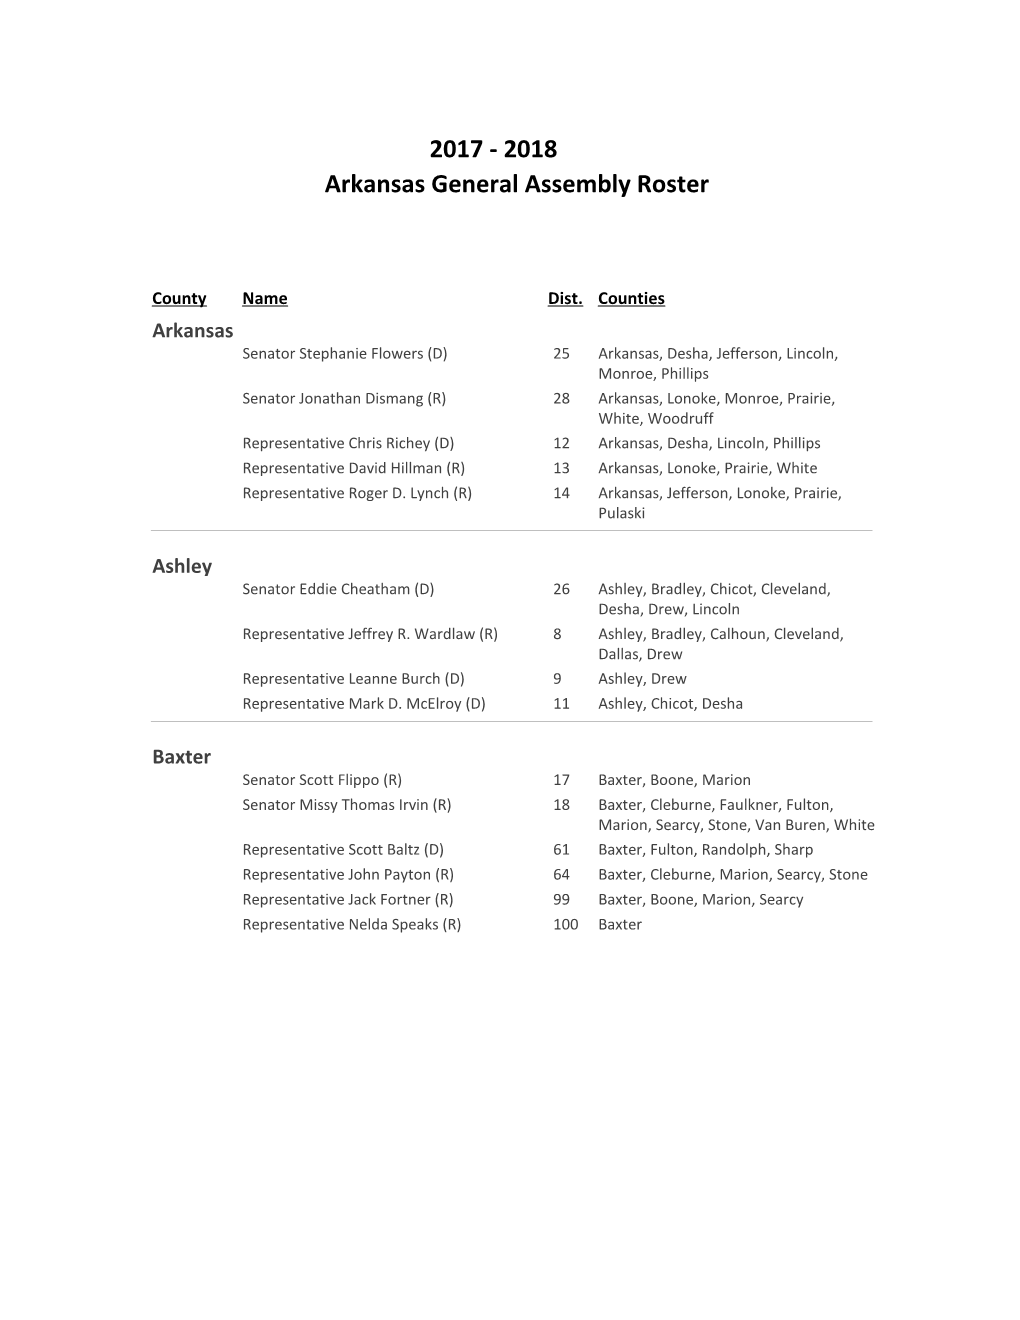 Arkansas General Assembly Roster 2017